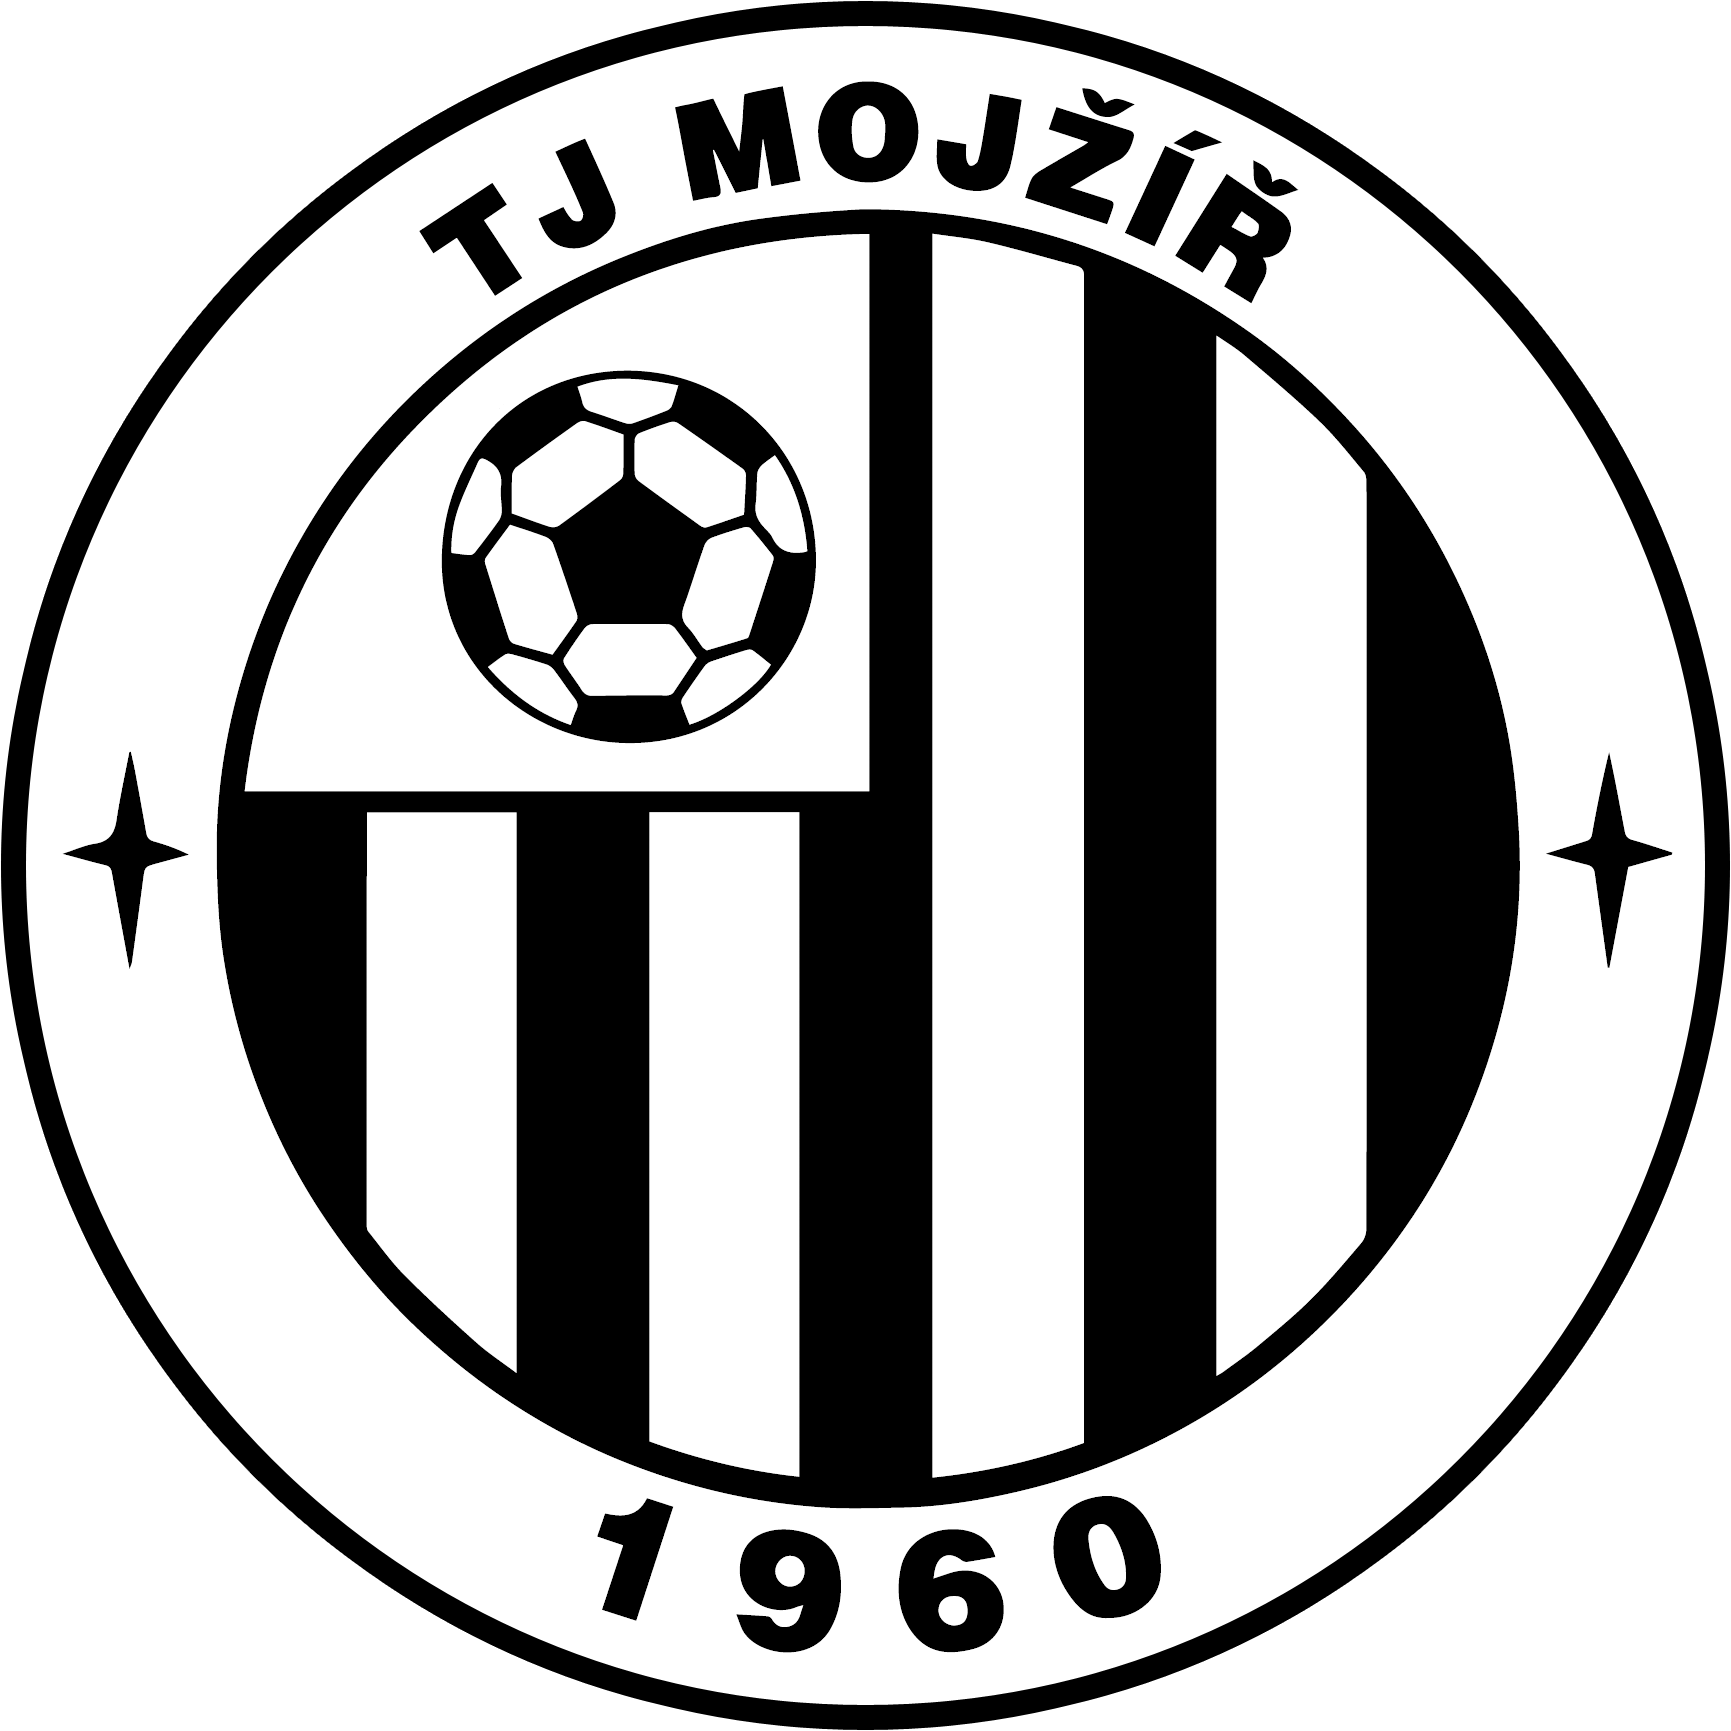 TJMojzir_logo_bila_2